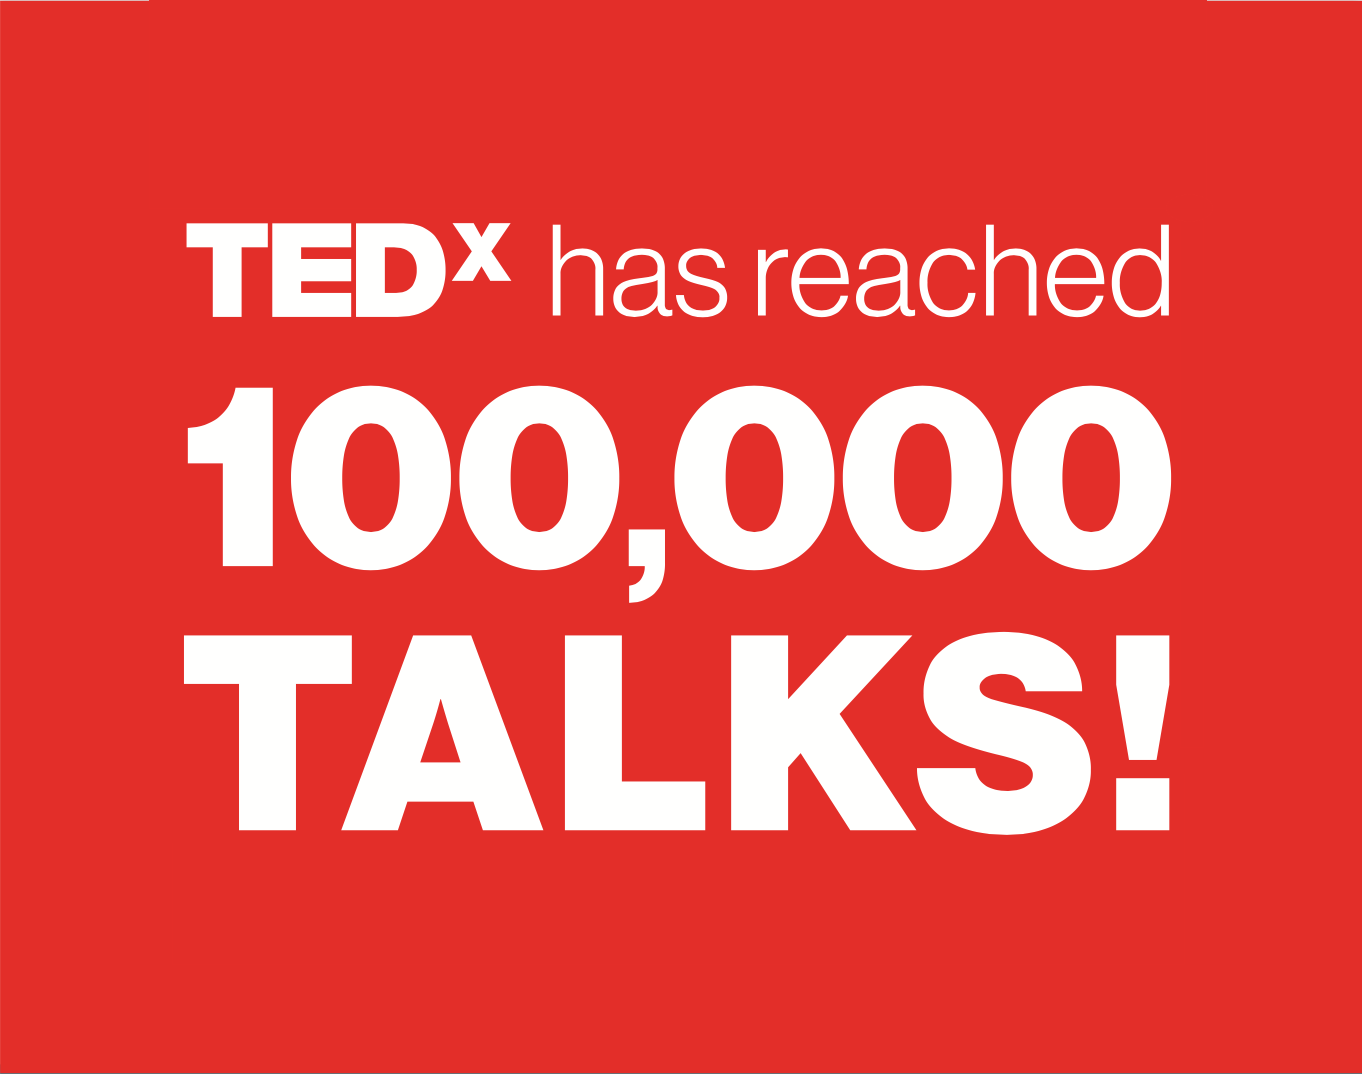 Achievement unlocked: TEDx celebrates 100,000 talks!